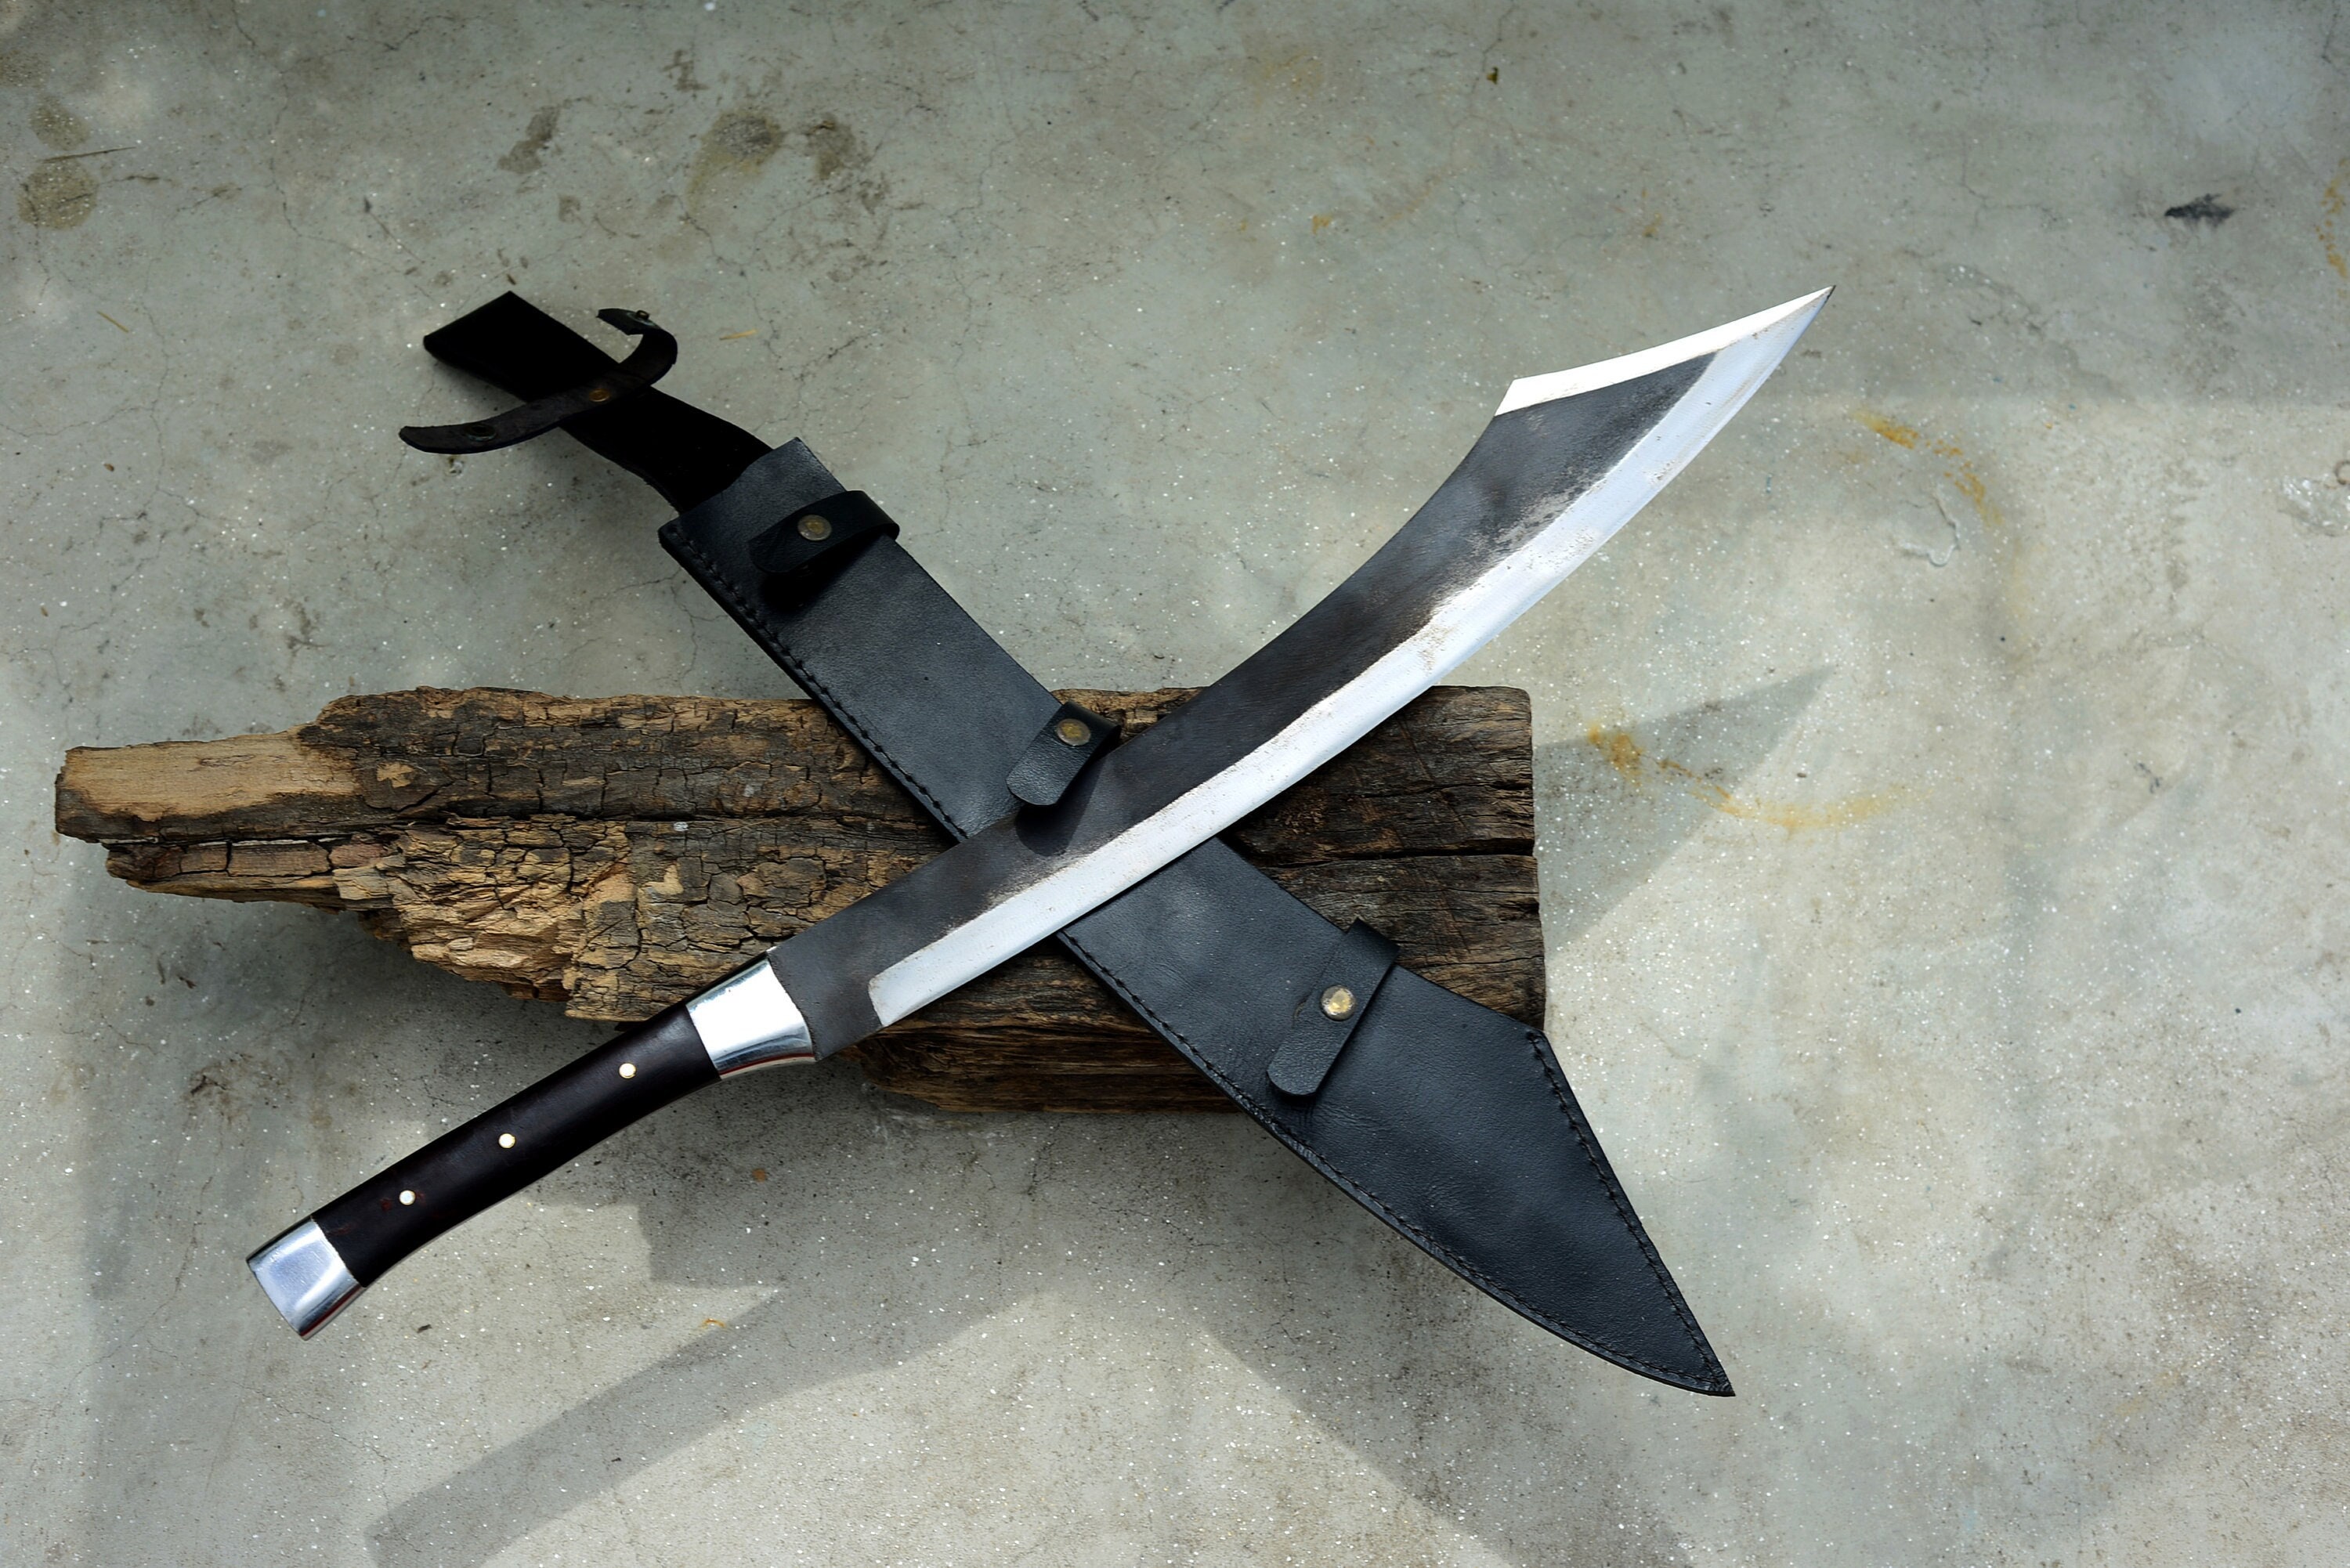 Tramontina machete turned to practice falchion : r/SWORDS